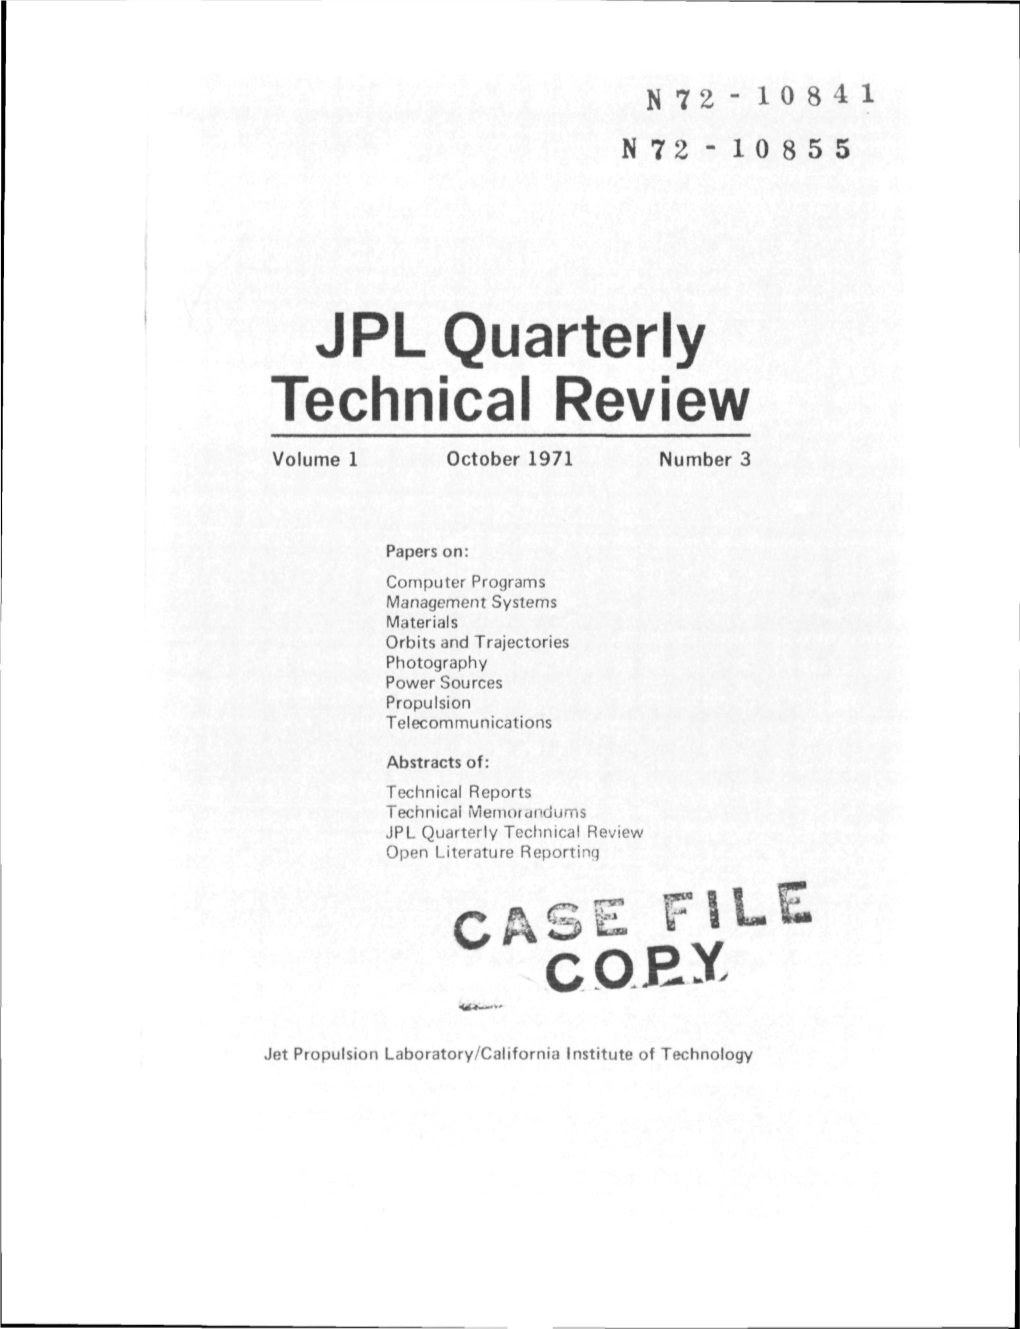 JPL Quarterly Technical Review Volume 1 October 1971 Number 3